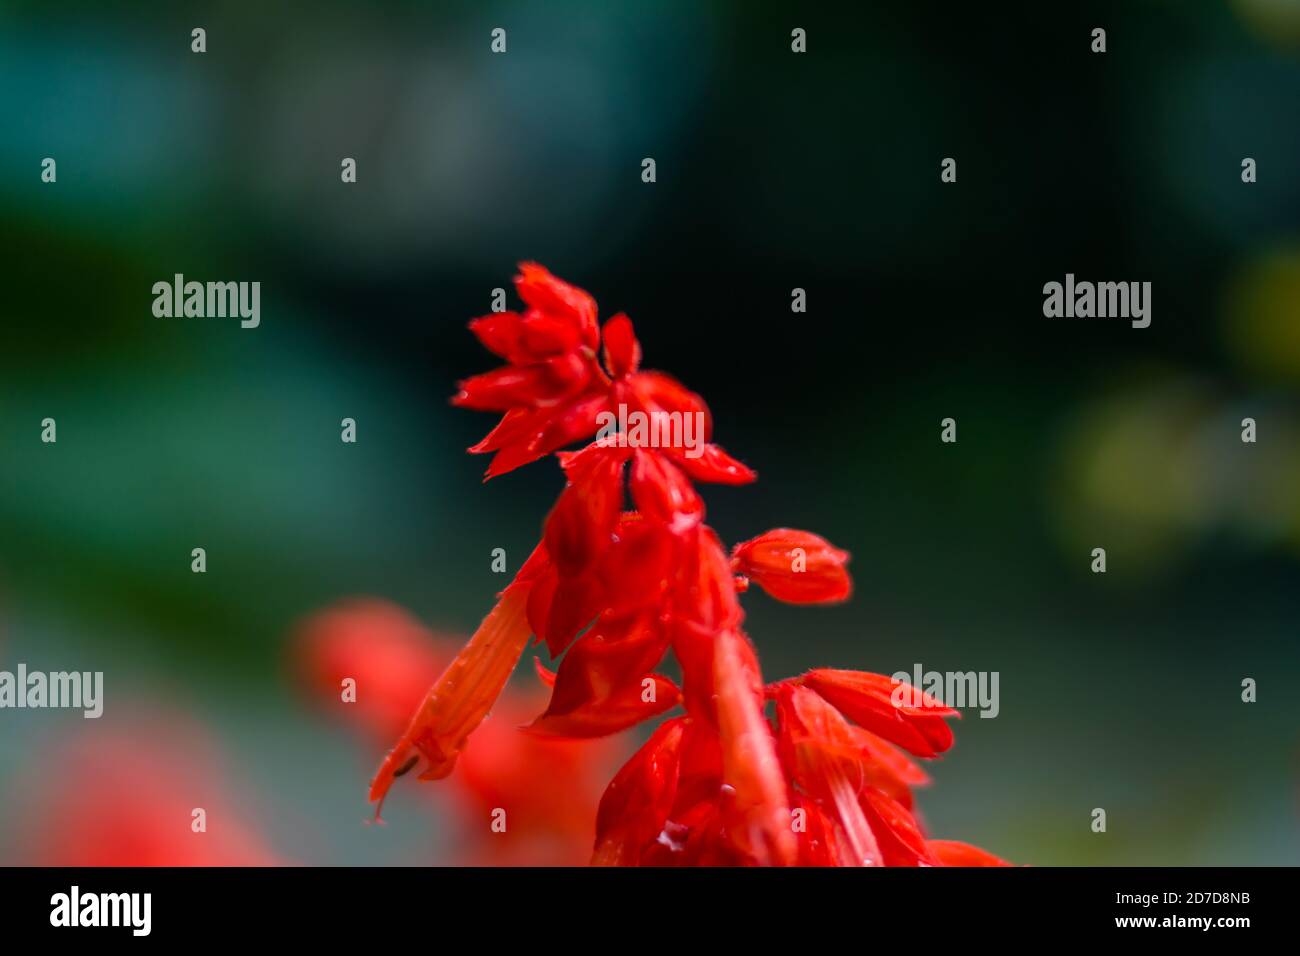 Lobelia flowers -Fotos und -Bildmaterial in hoher Auflösung – Alamy